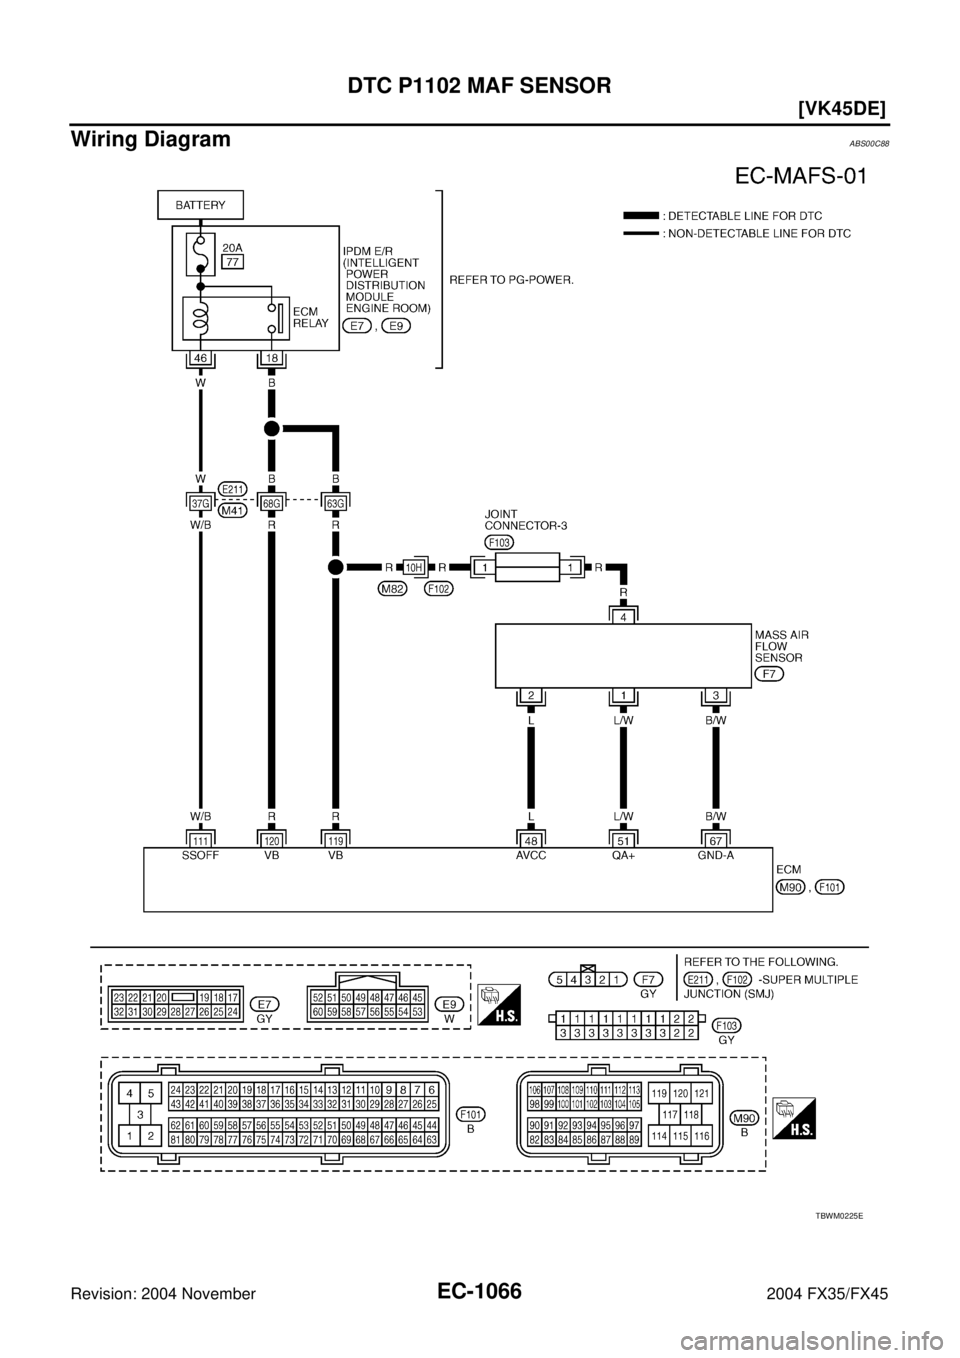 INFINITI FX35 2004  Service Manual EC-1066
[VK45DE]
DTC P1102 MAF SENSOR
Revision: 2004 November 2004 FX35/FX45
Wiring DiagramABS00C88
TBWM0225E 